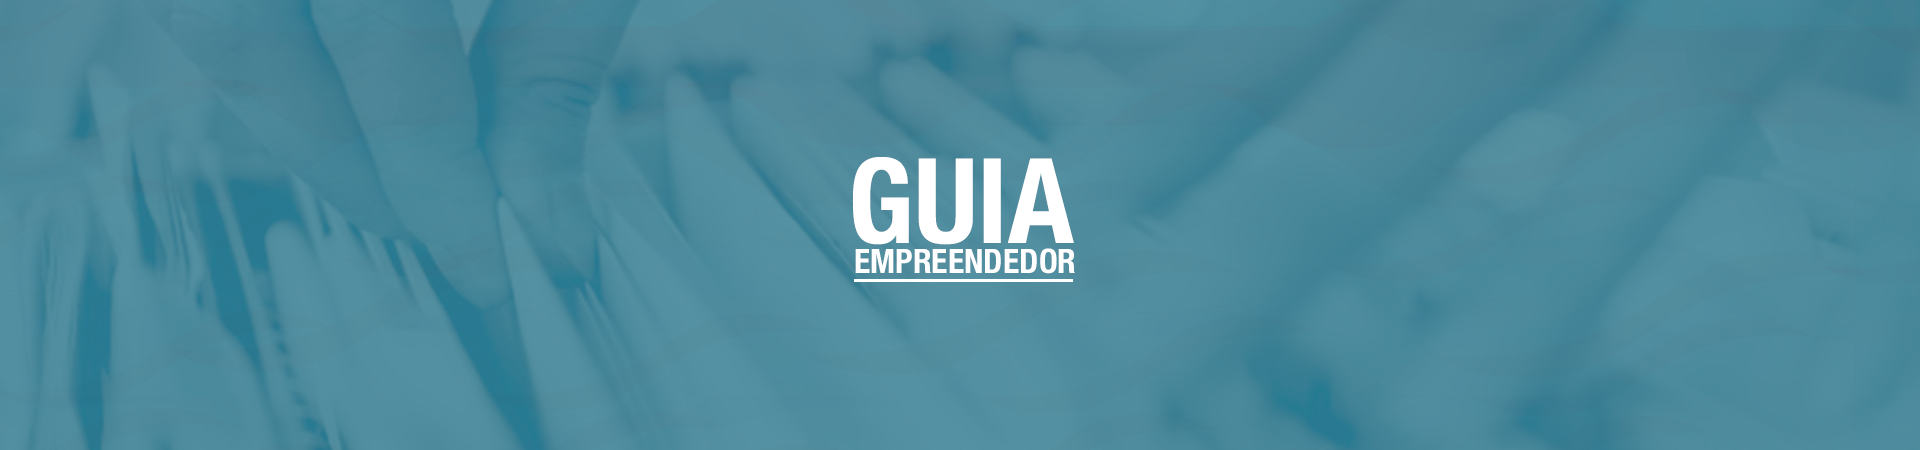 guia-banner.png